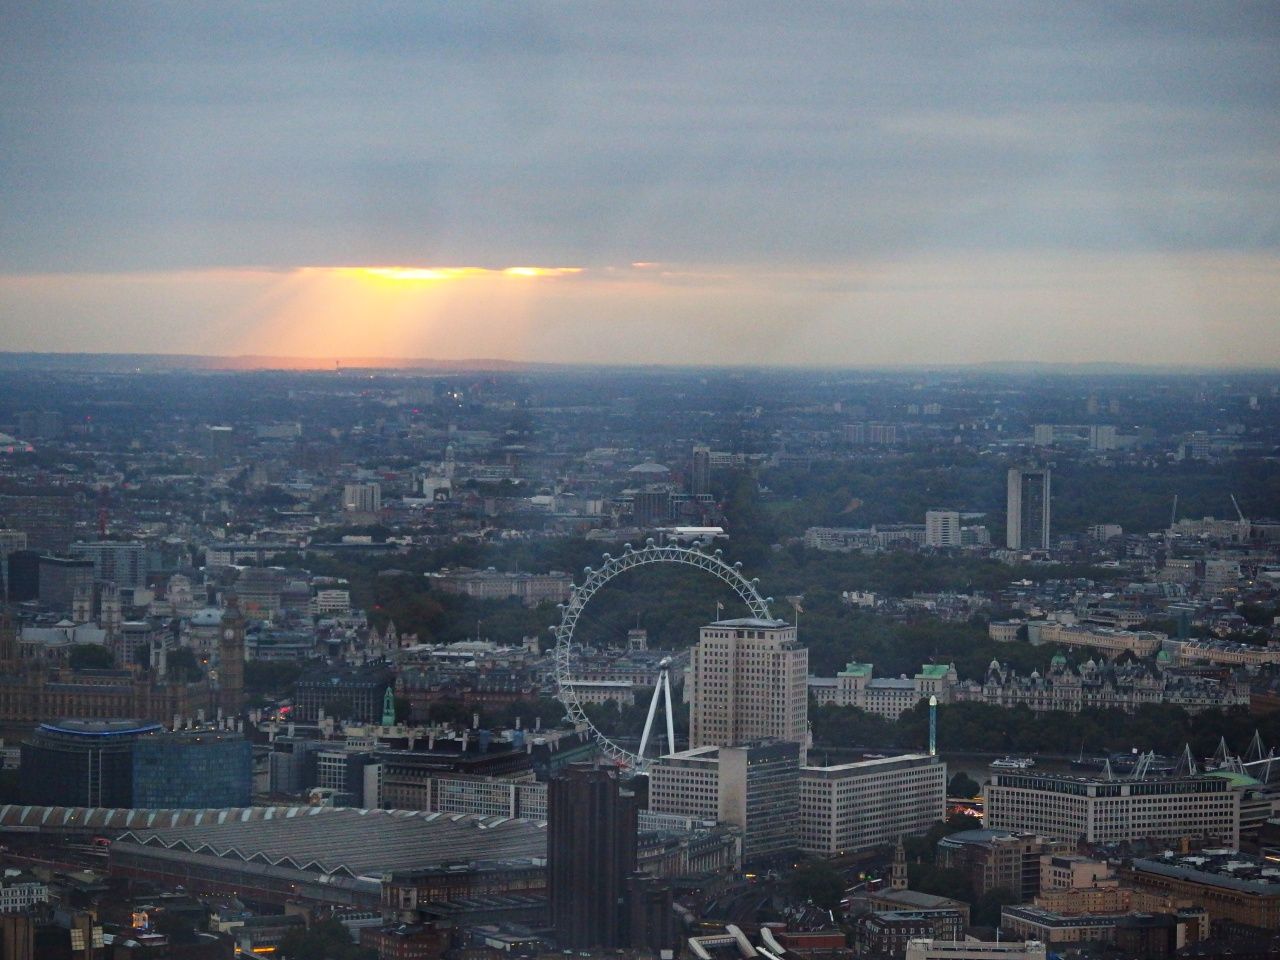 Sun setting over London